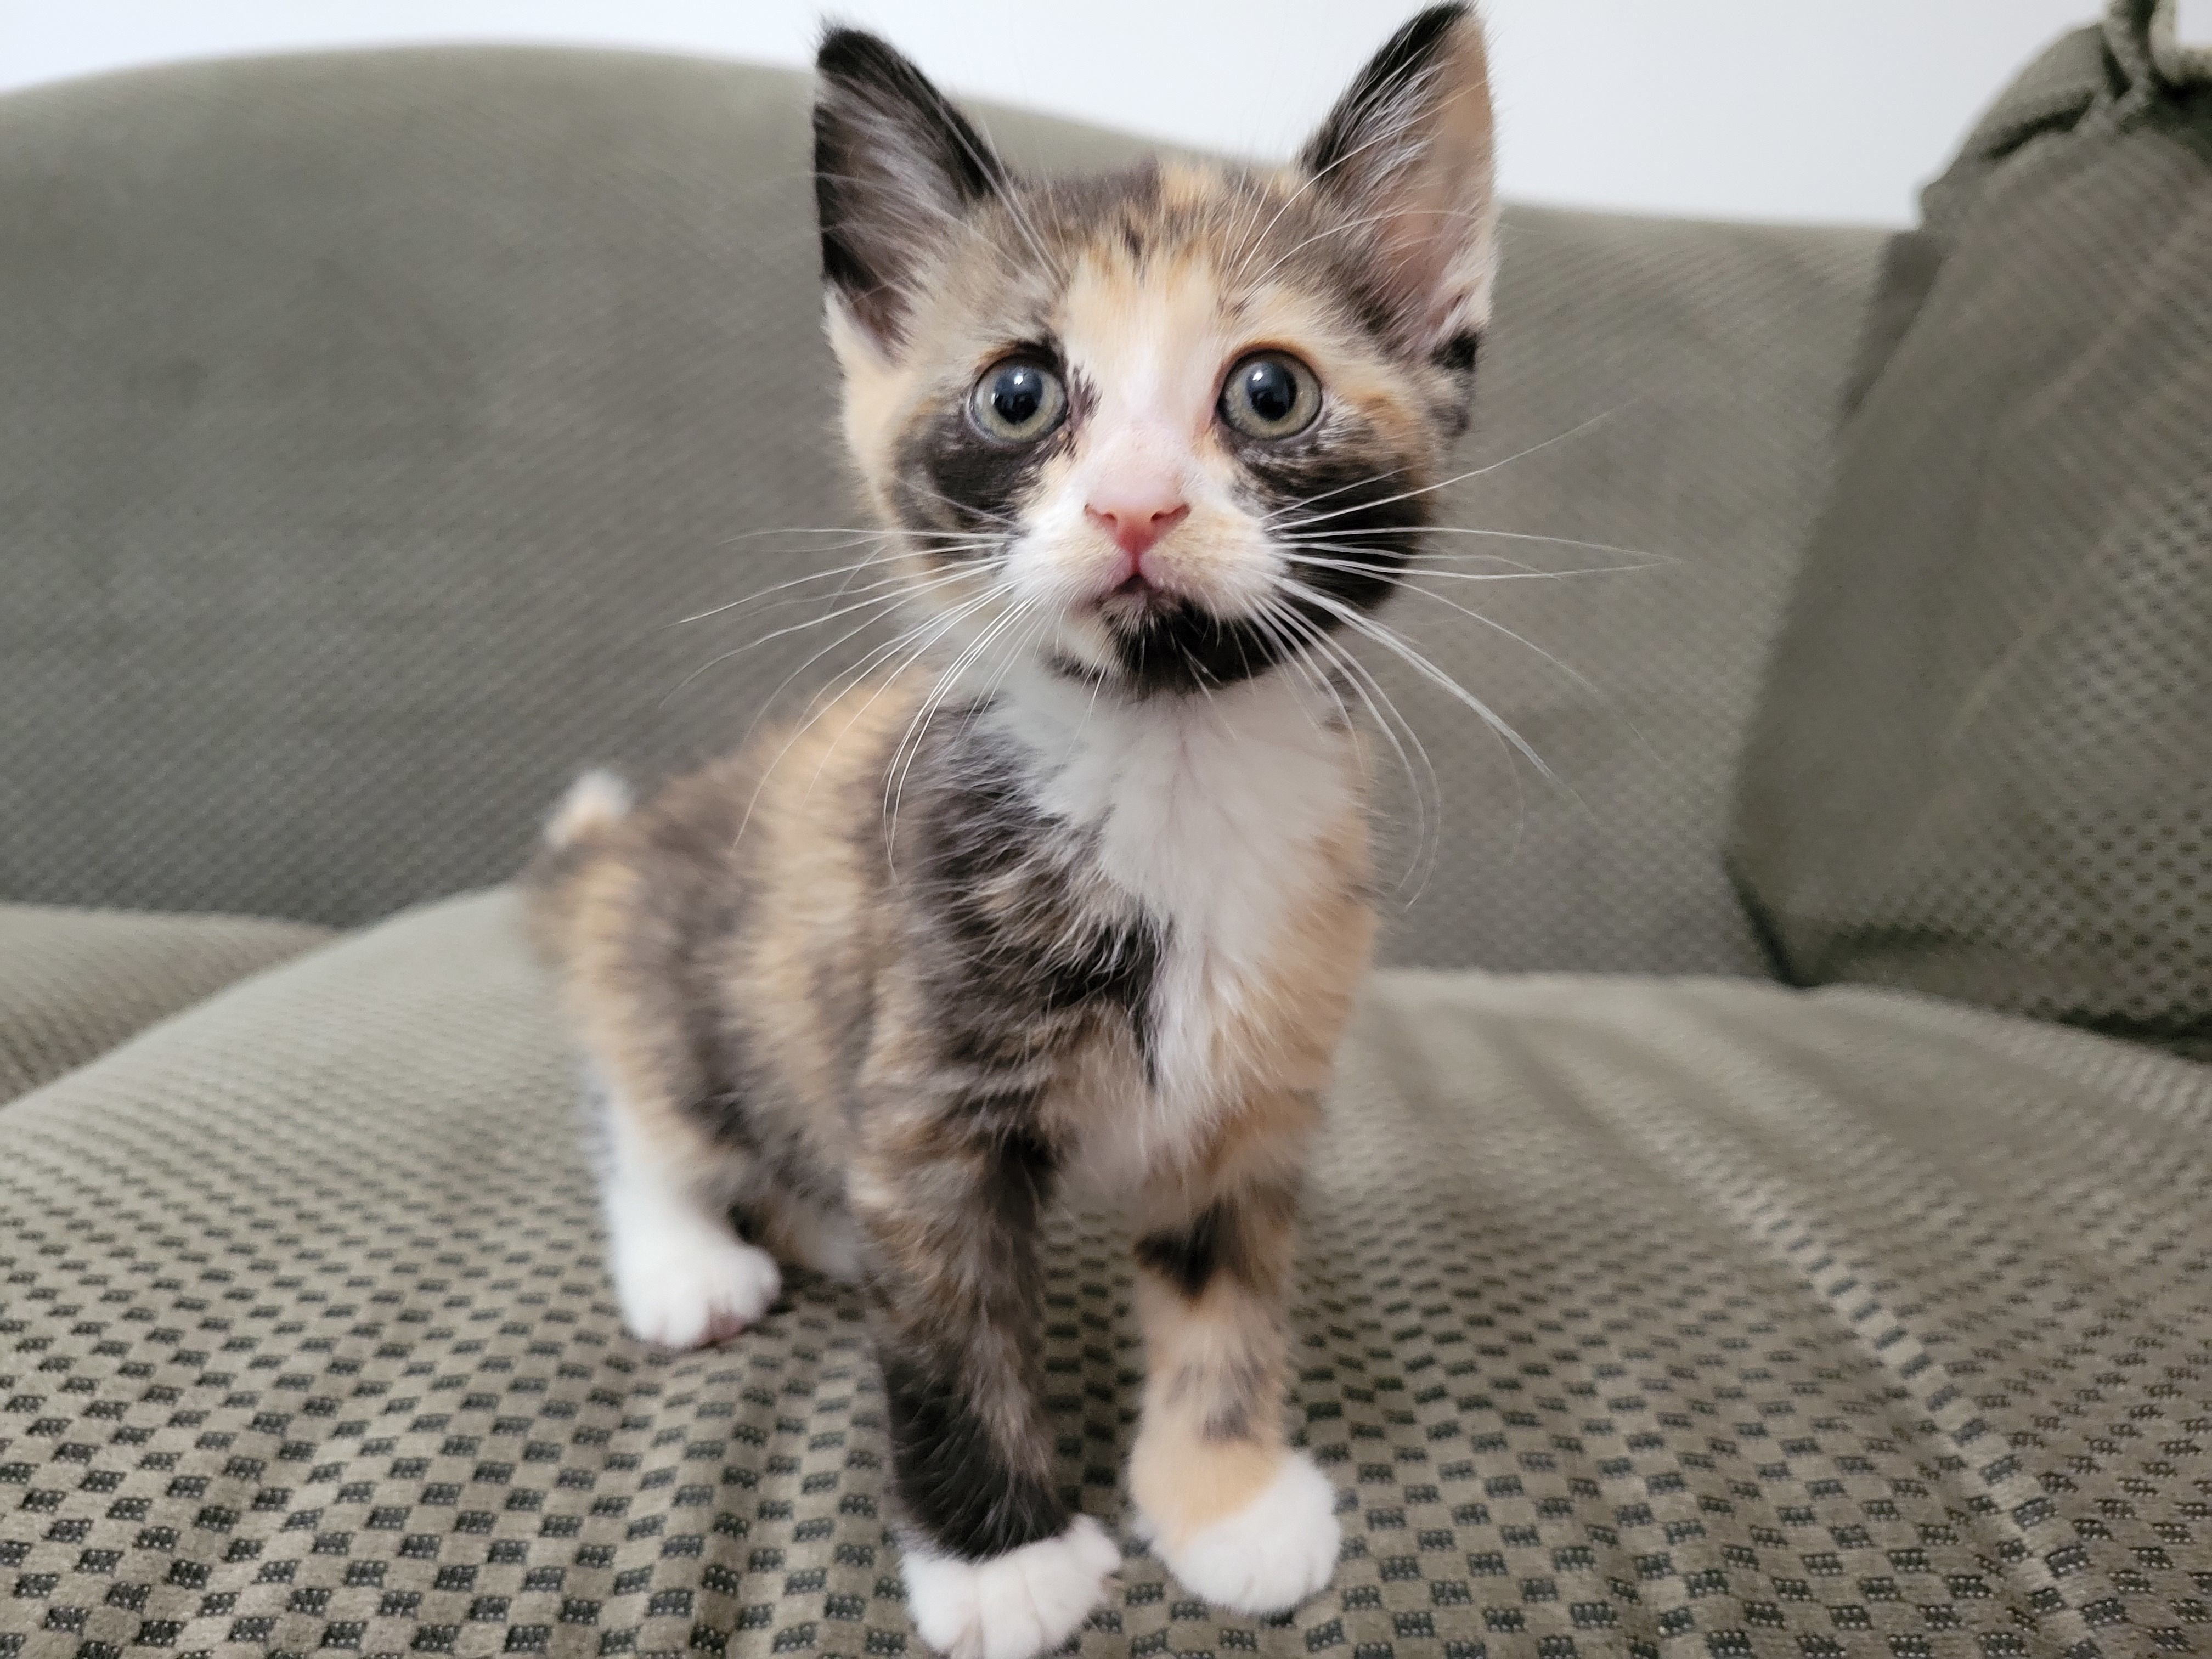 Saving More Lives through Our Feline Foster Program